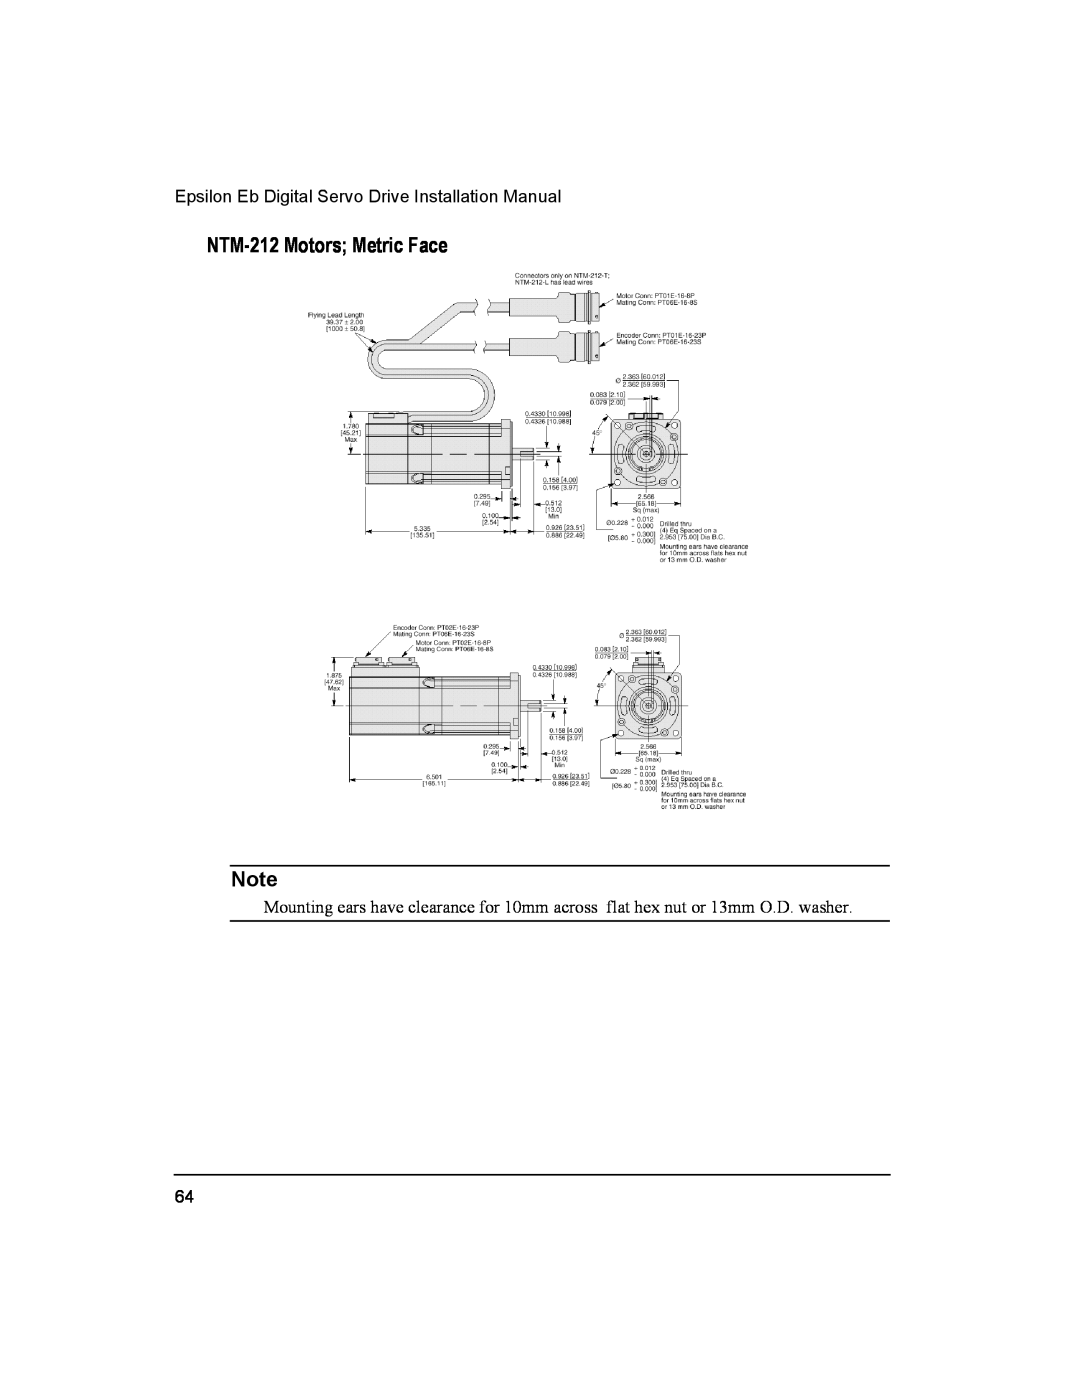 Emerson 400501-05 installation manual NTM-212 Motors Metric Face, Epsilon Eb Digital Servo Drive Installation Manual 